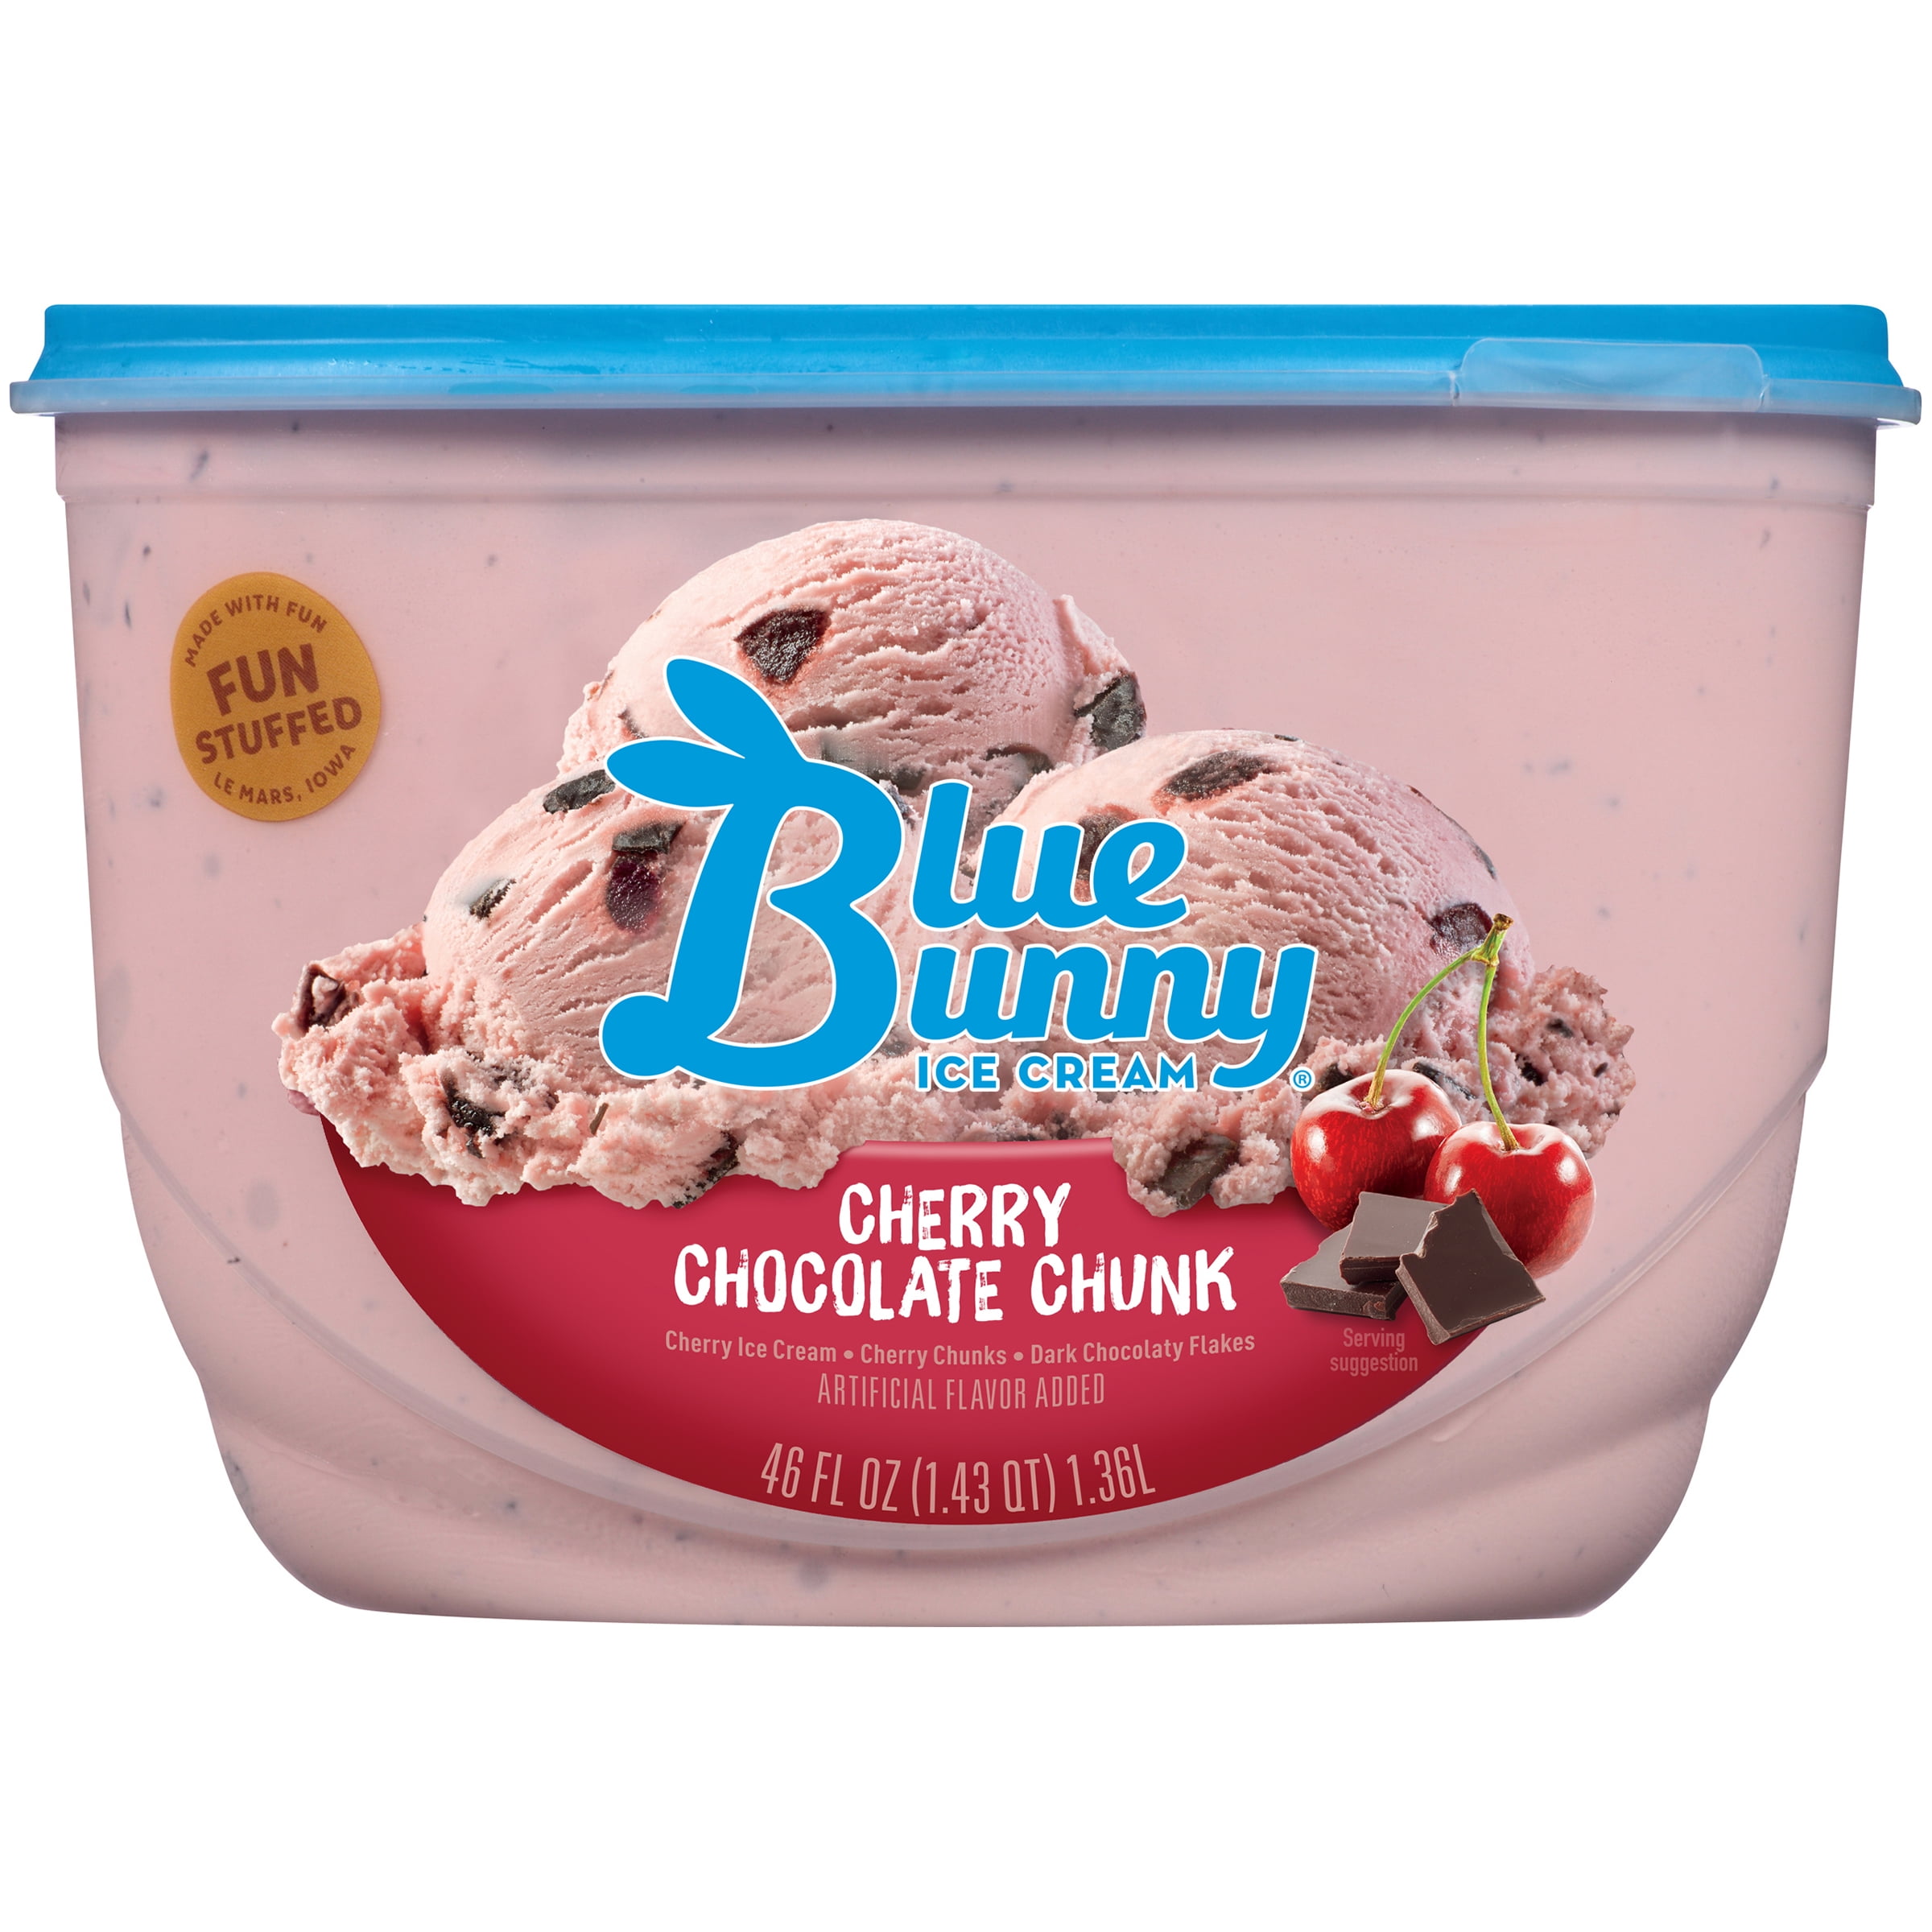 Blue Bunny Cherry Chocolate Chunk Premium Ice Cream 46 fl oz - Walmart.com